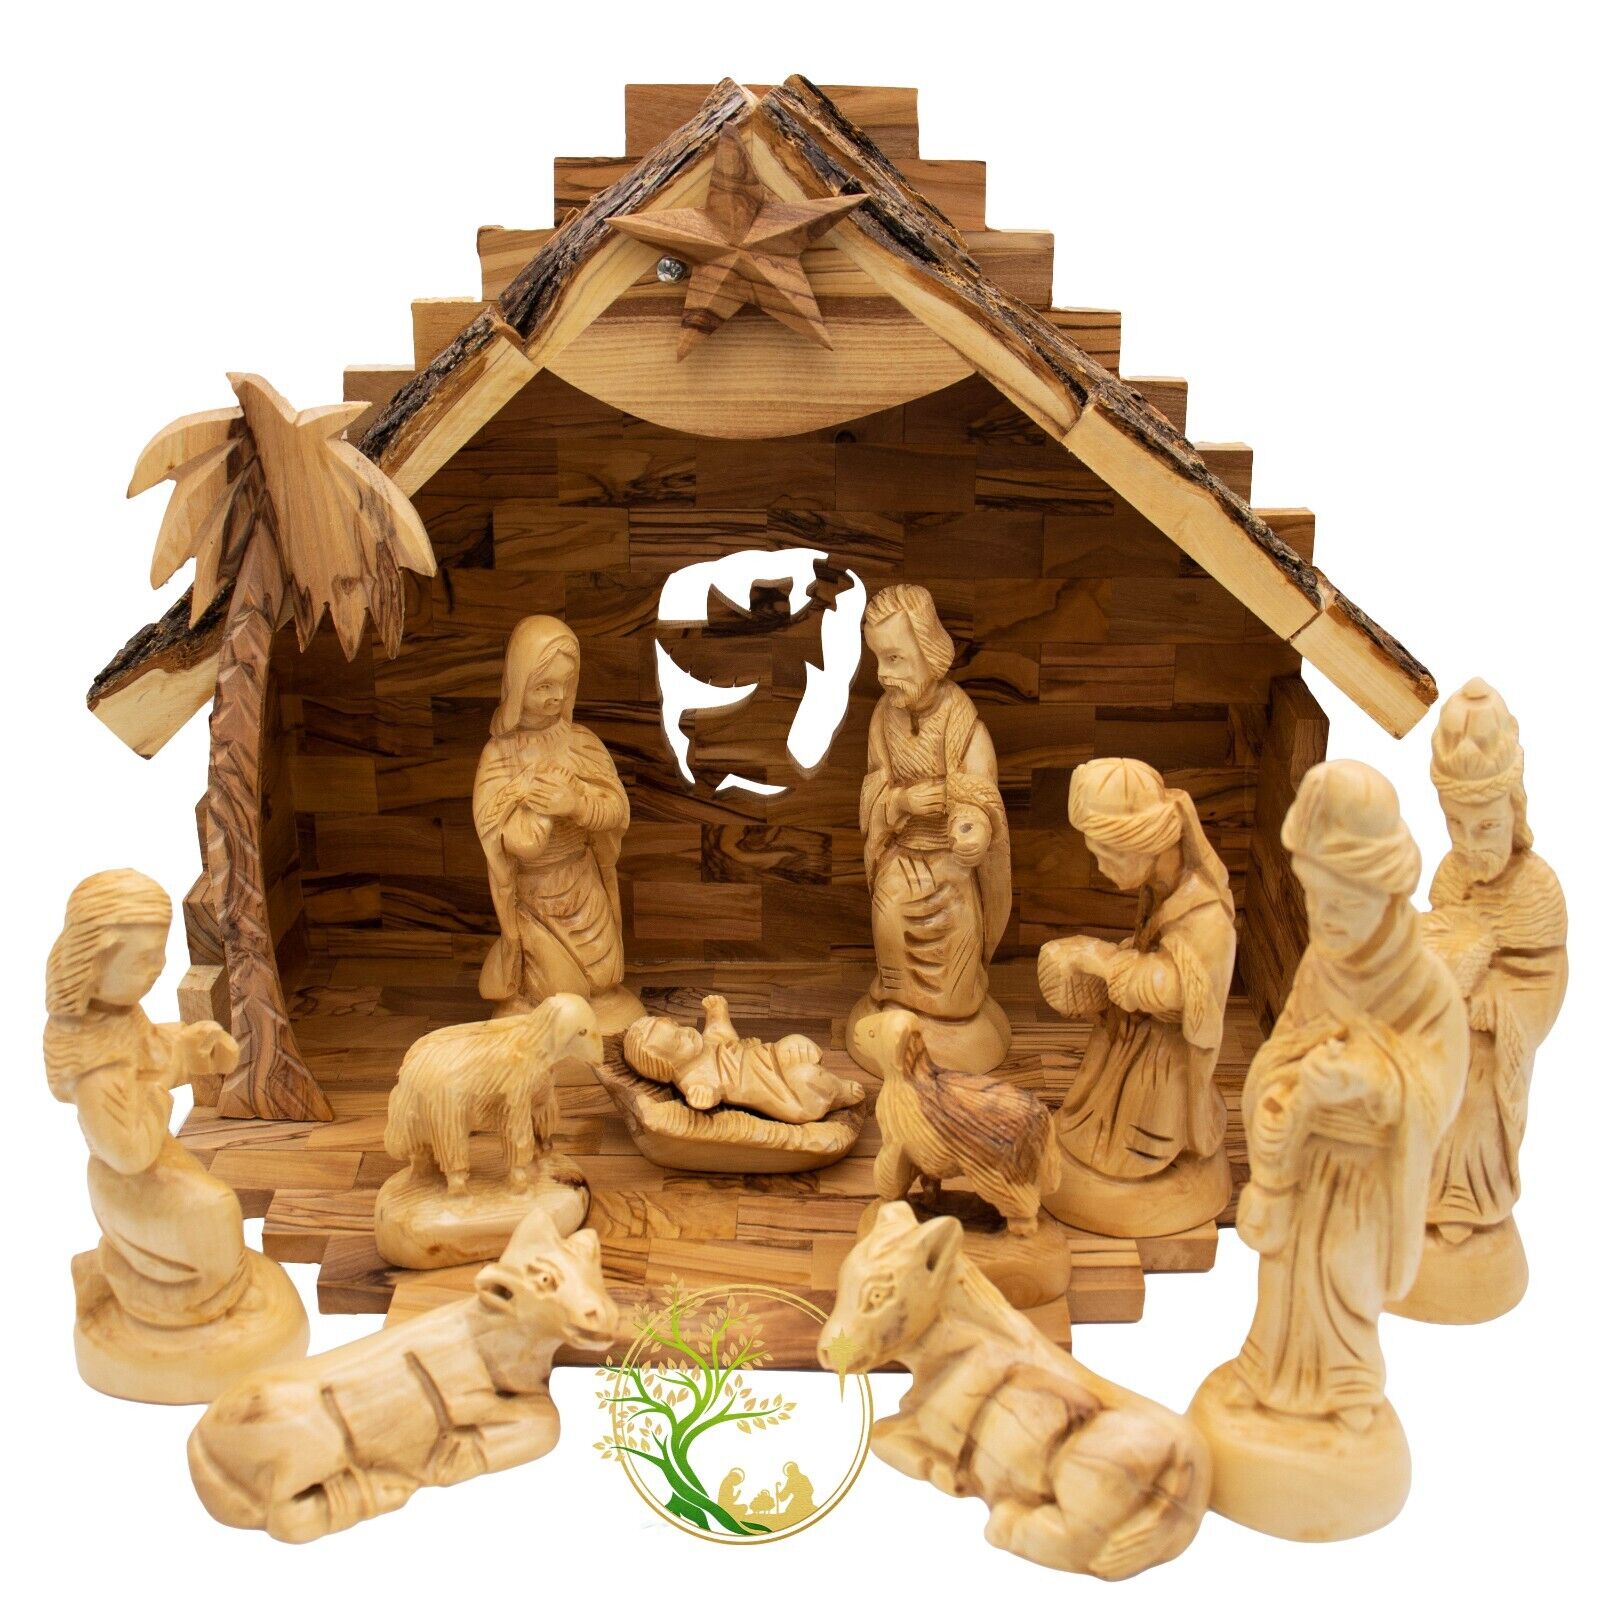 Christmas Nativity set from the Holy Land |Large wooden Nativity scene